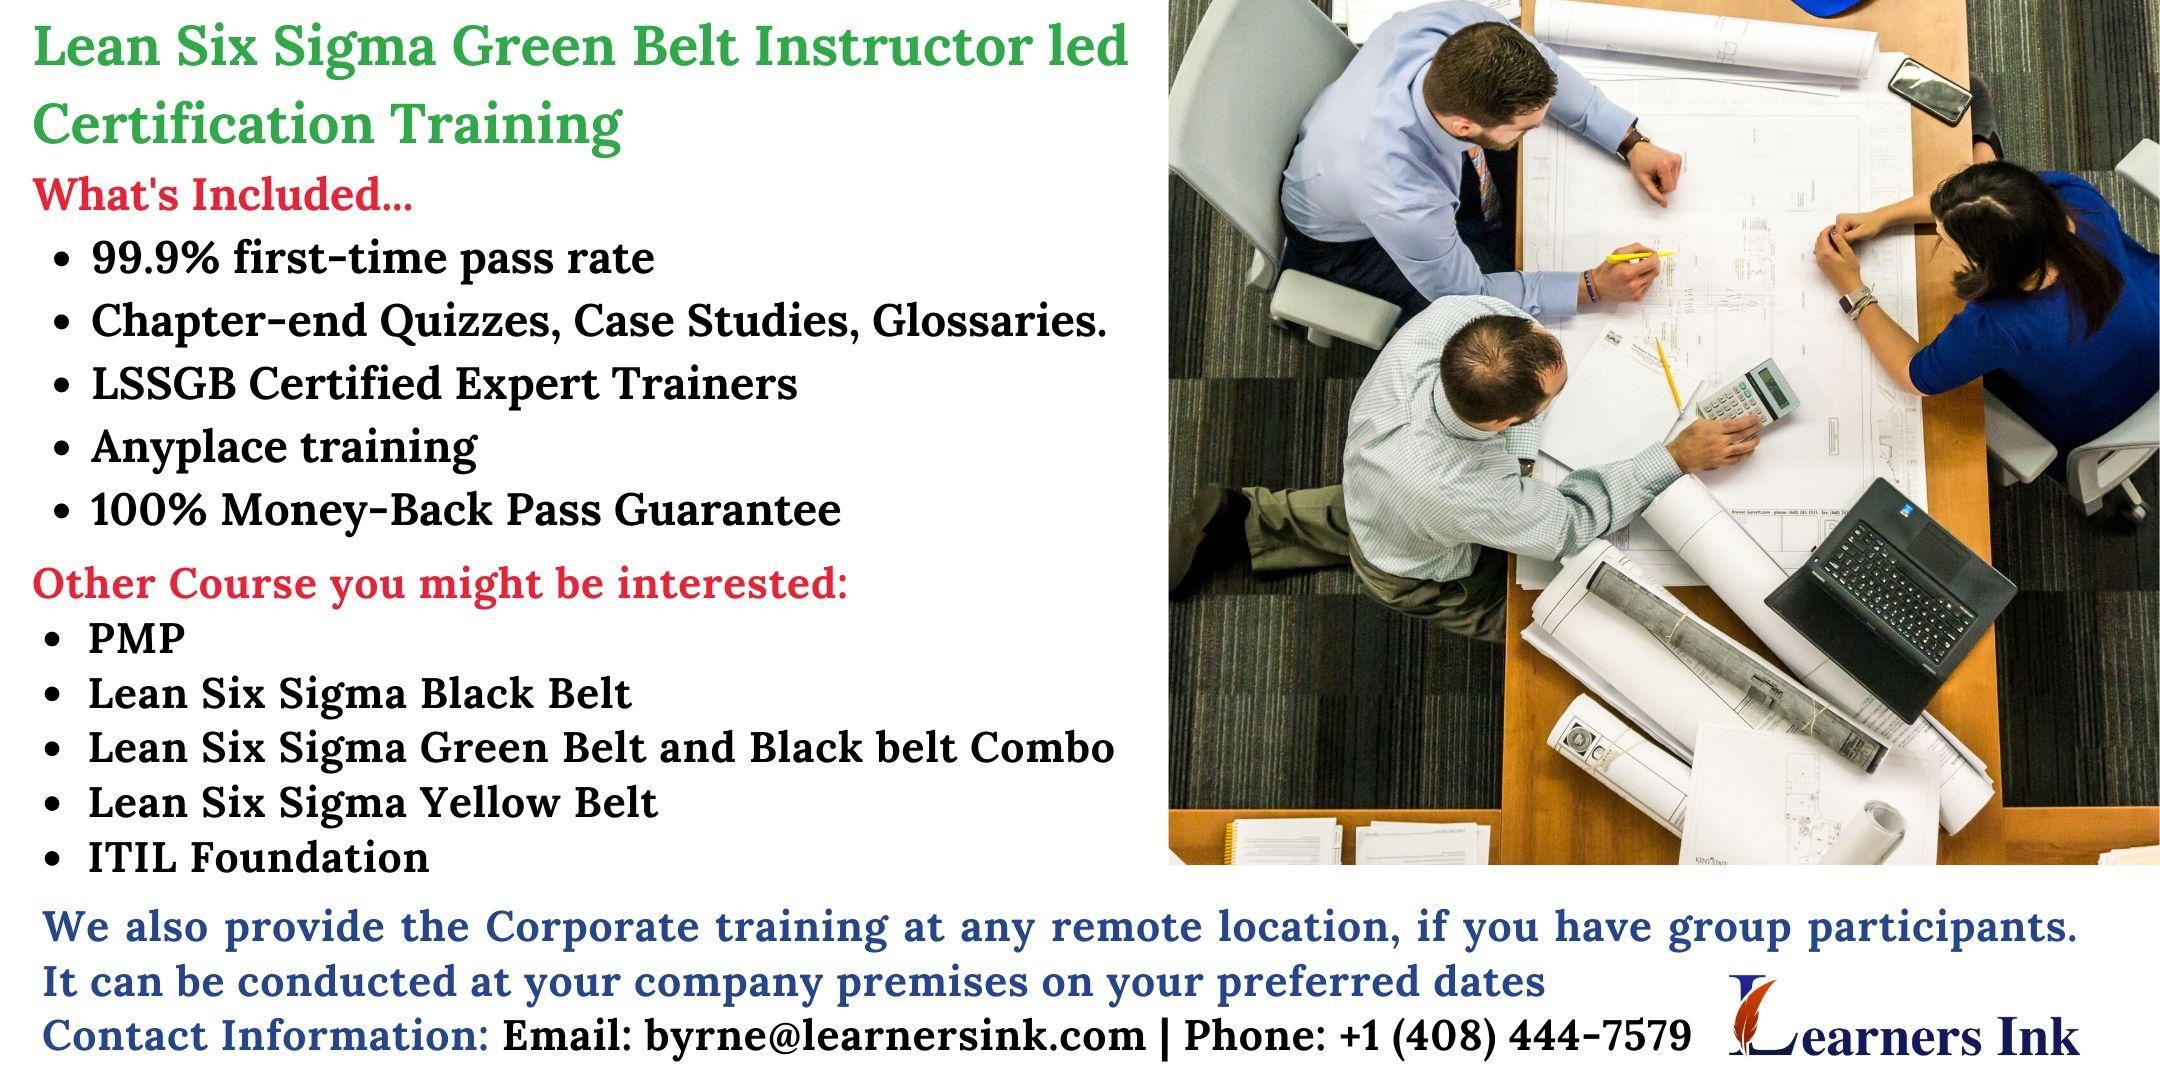 Lean Six Sigma Green Belt Certification Training Course (LSSGB) in Cambridge